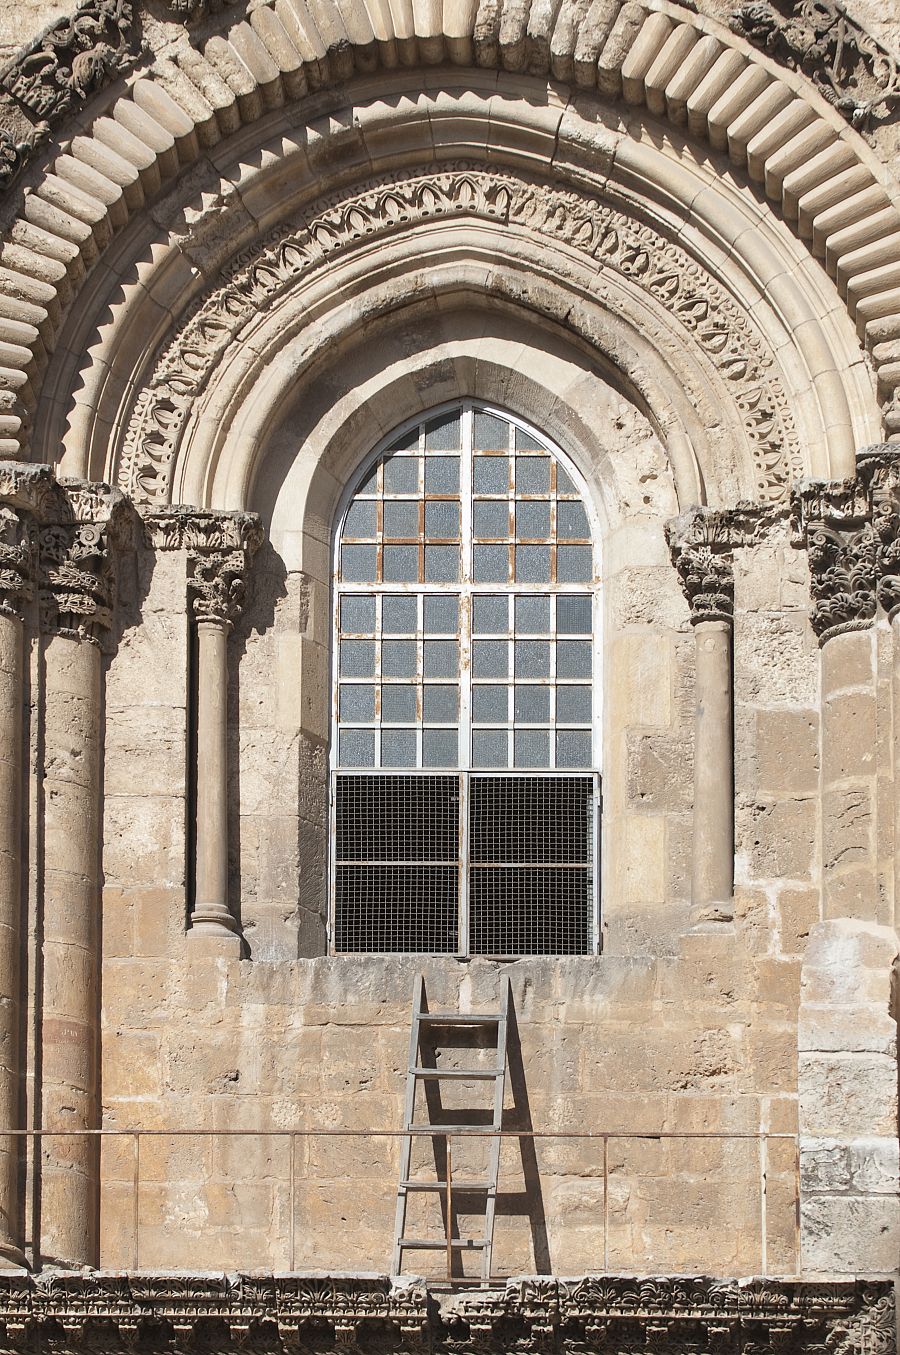 La emblemática escalera de la iglesia del Santo Sepulcro